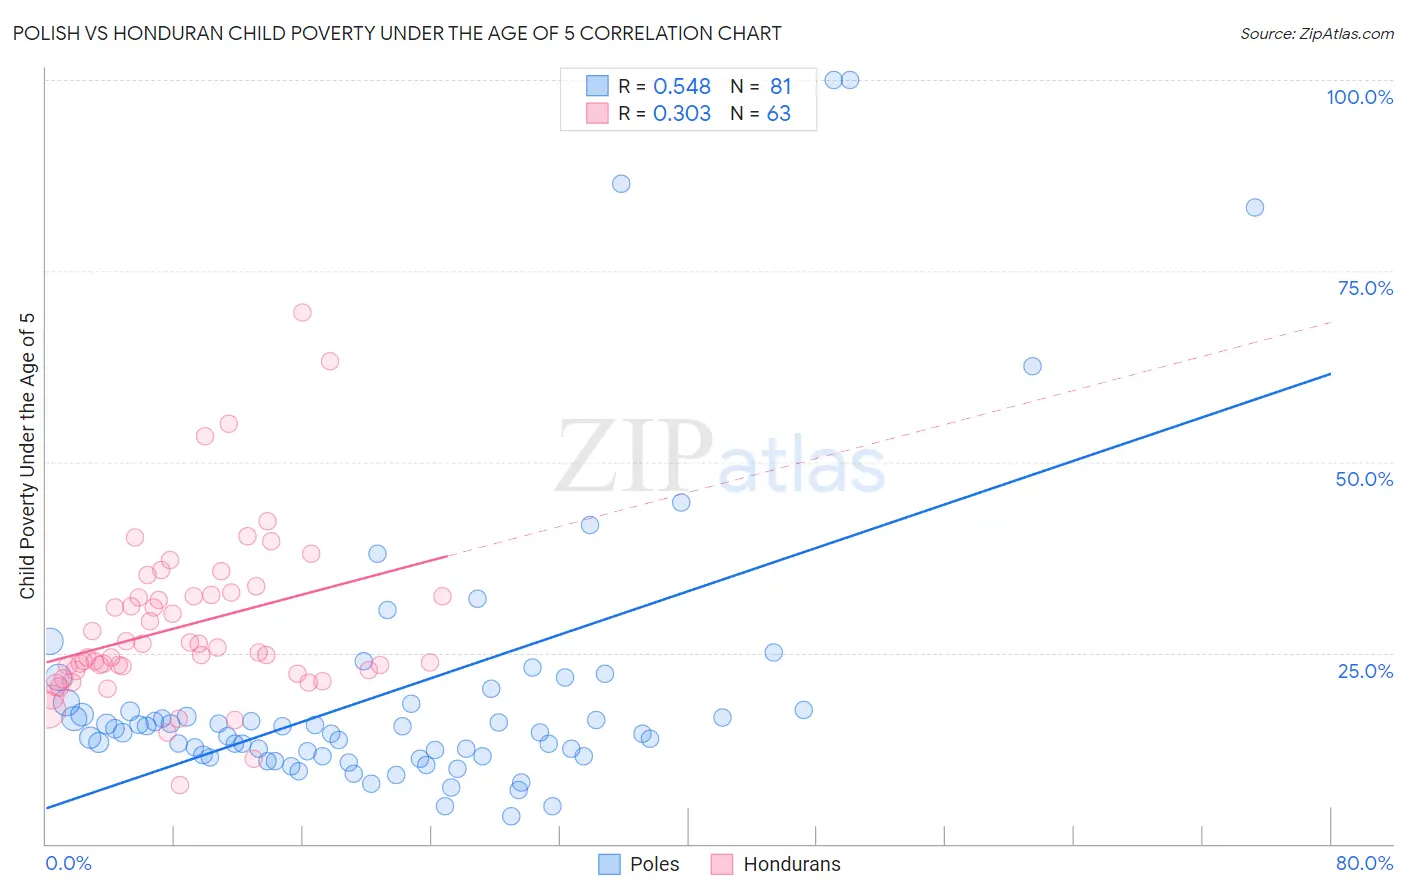 Polish vs Honduran Child Poverty Under the Age of 5